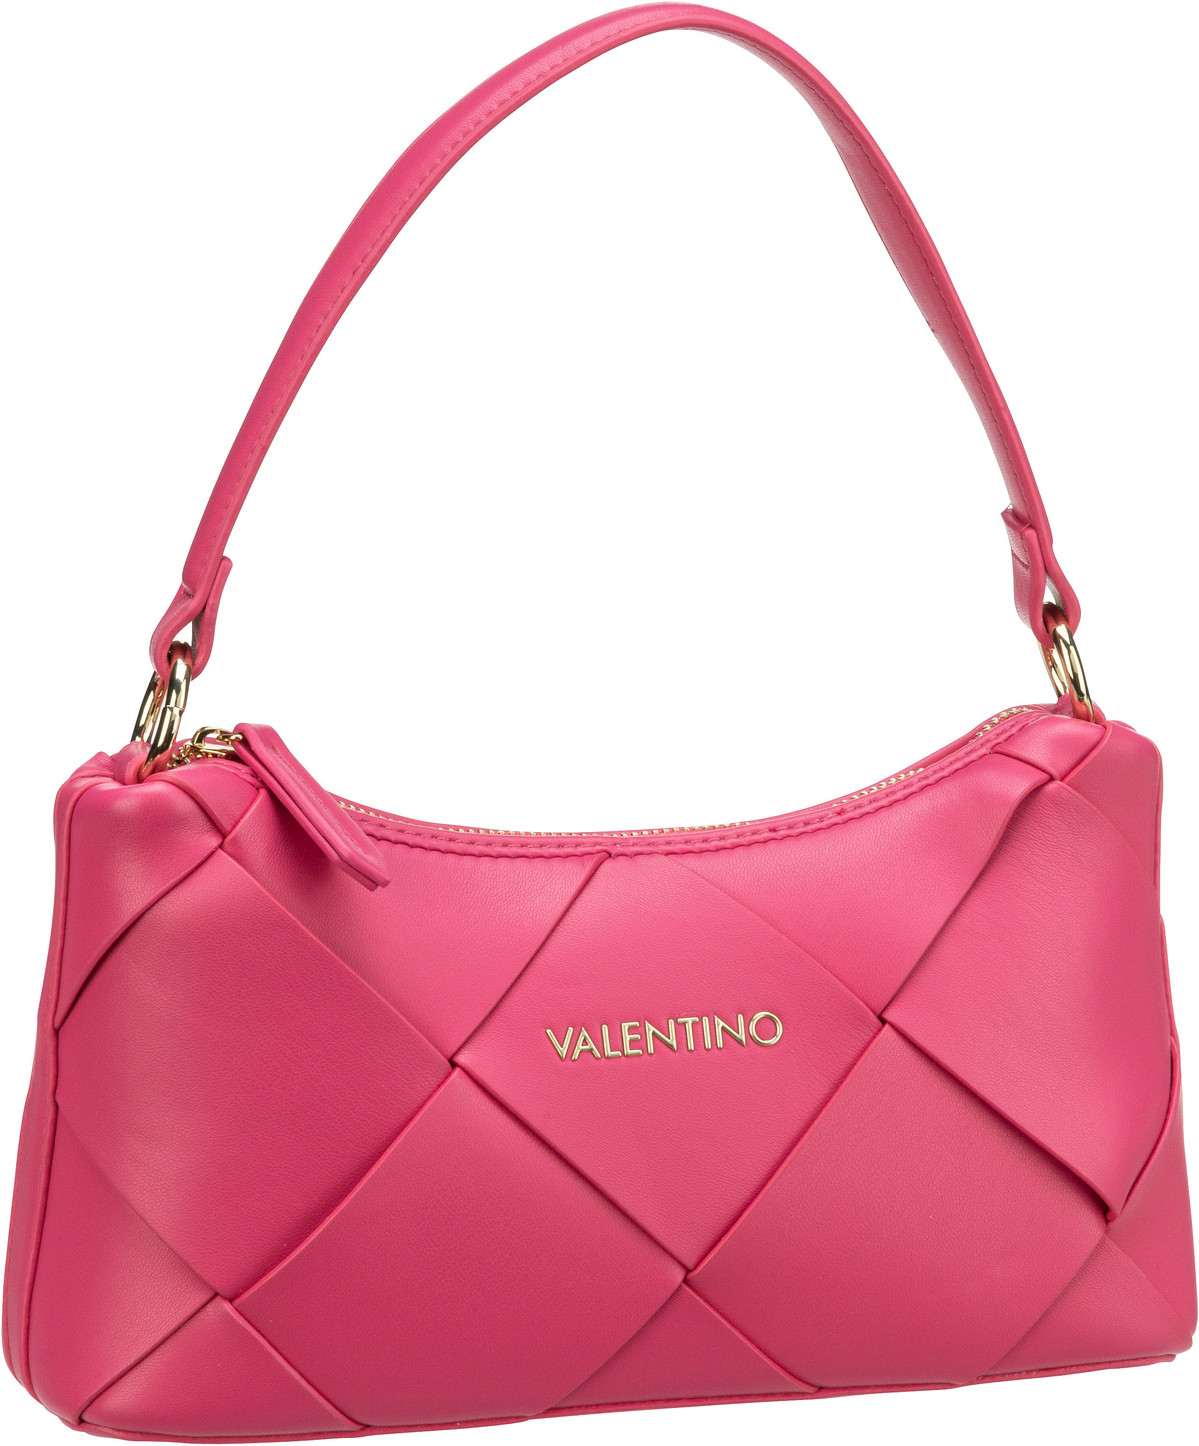 Valentino Ibiza Shoulder Bag 503 - Fuxia